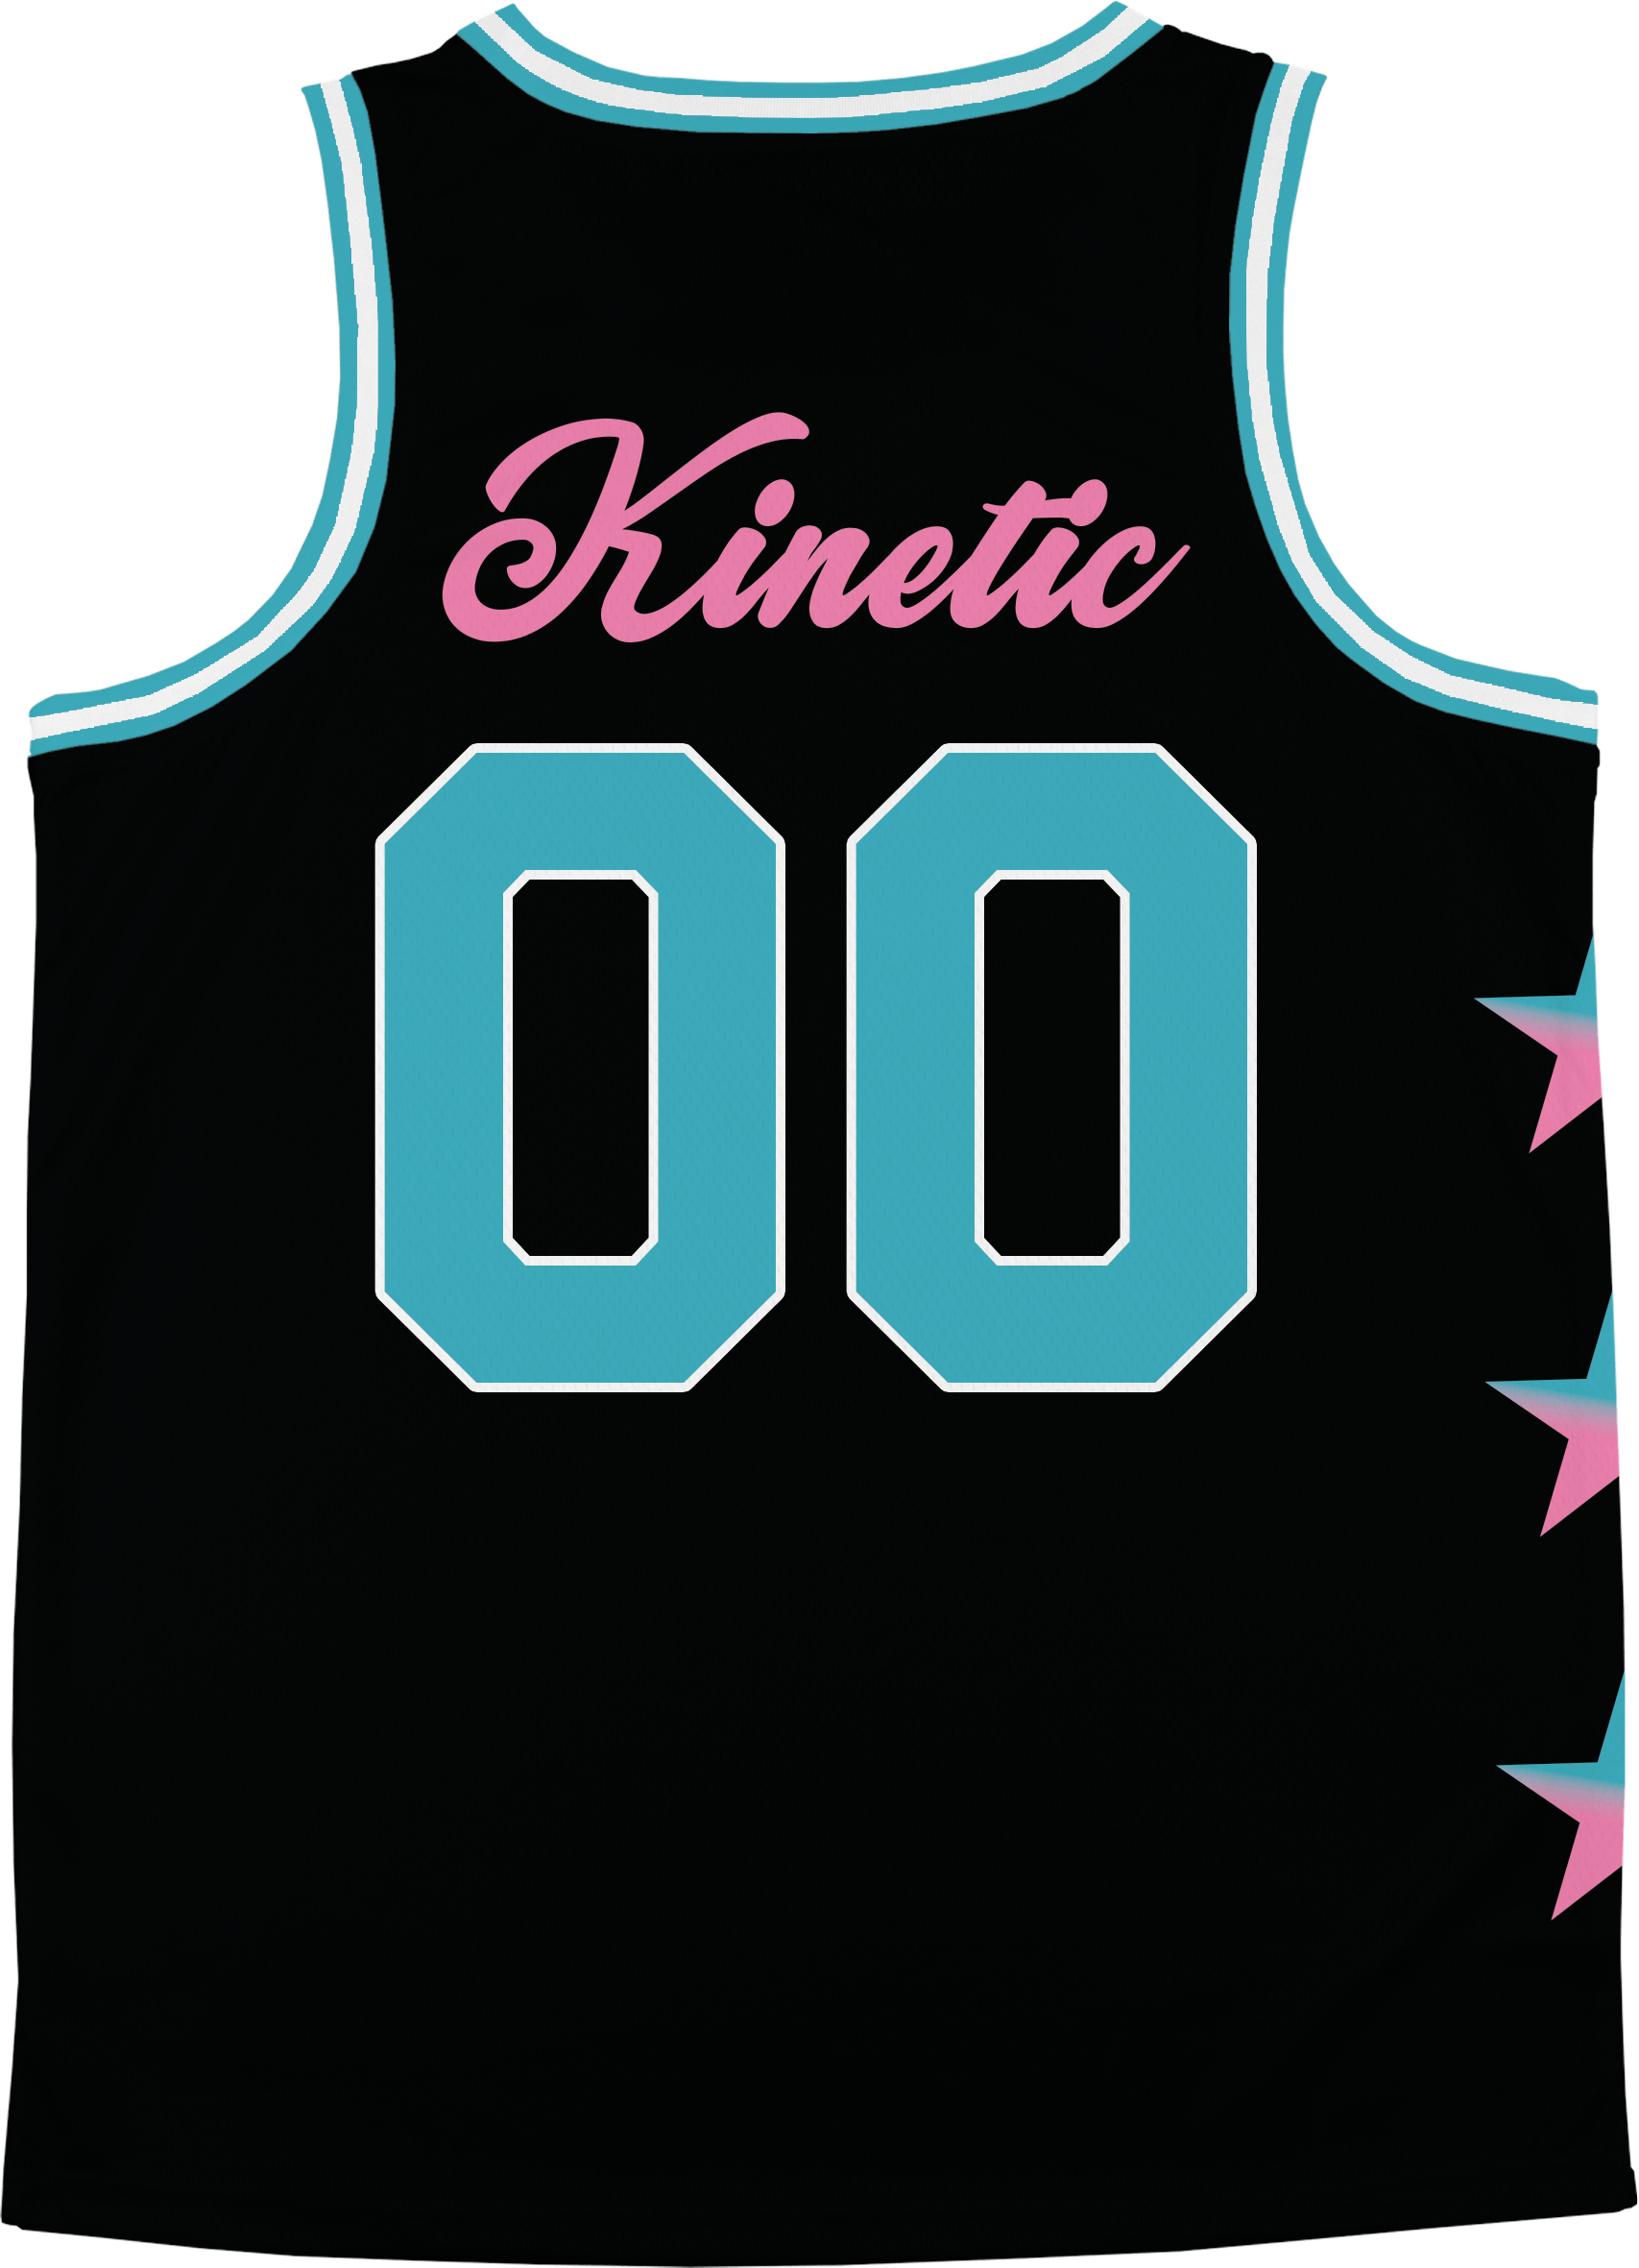 Sigma Phi Epsilon - Cotton Candy Basketball Jersey - Kinetic Society